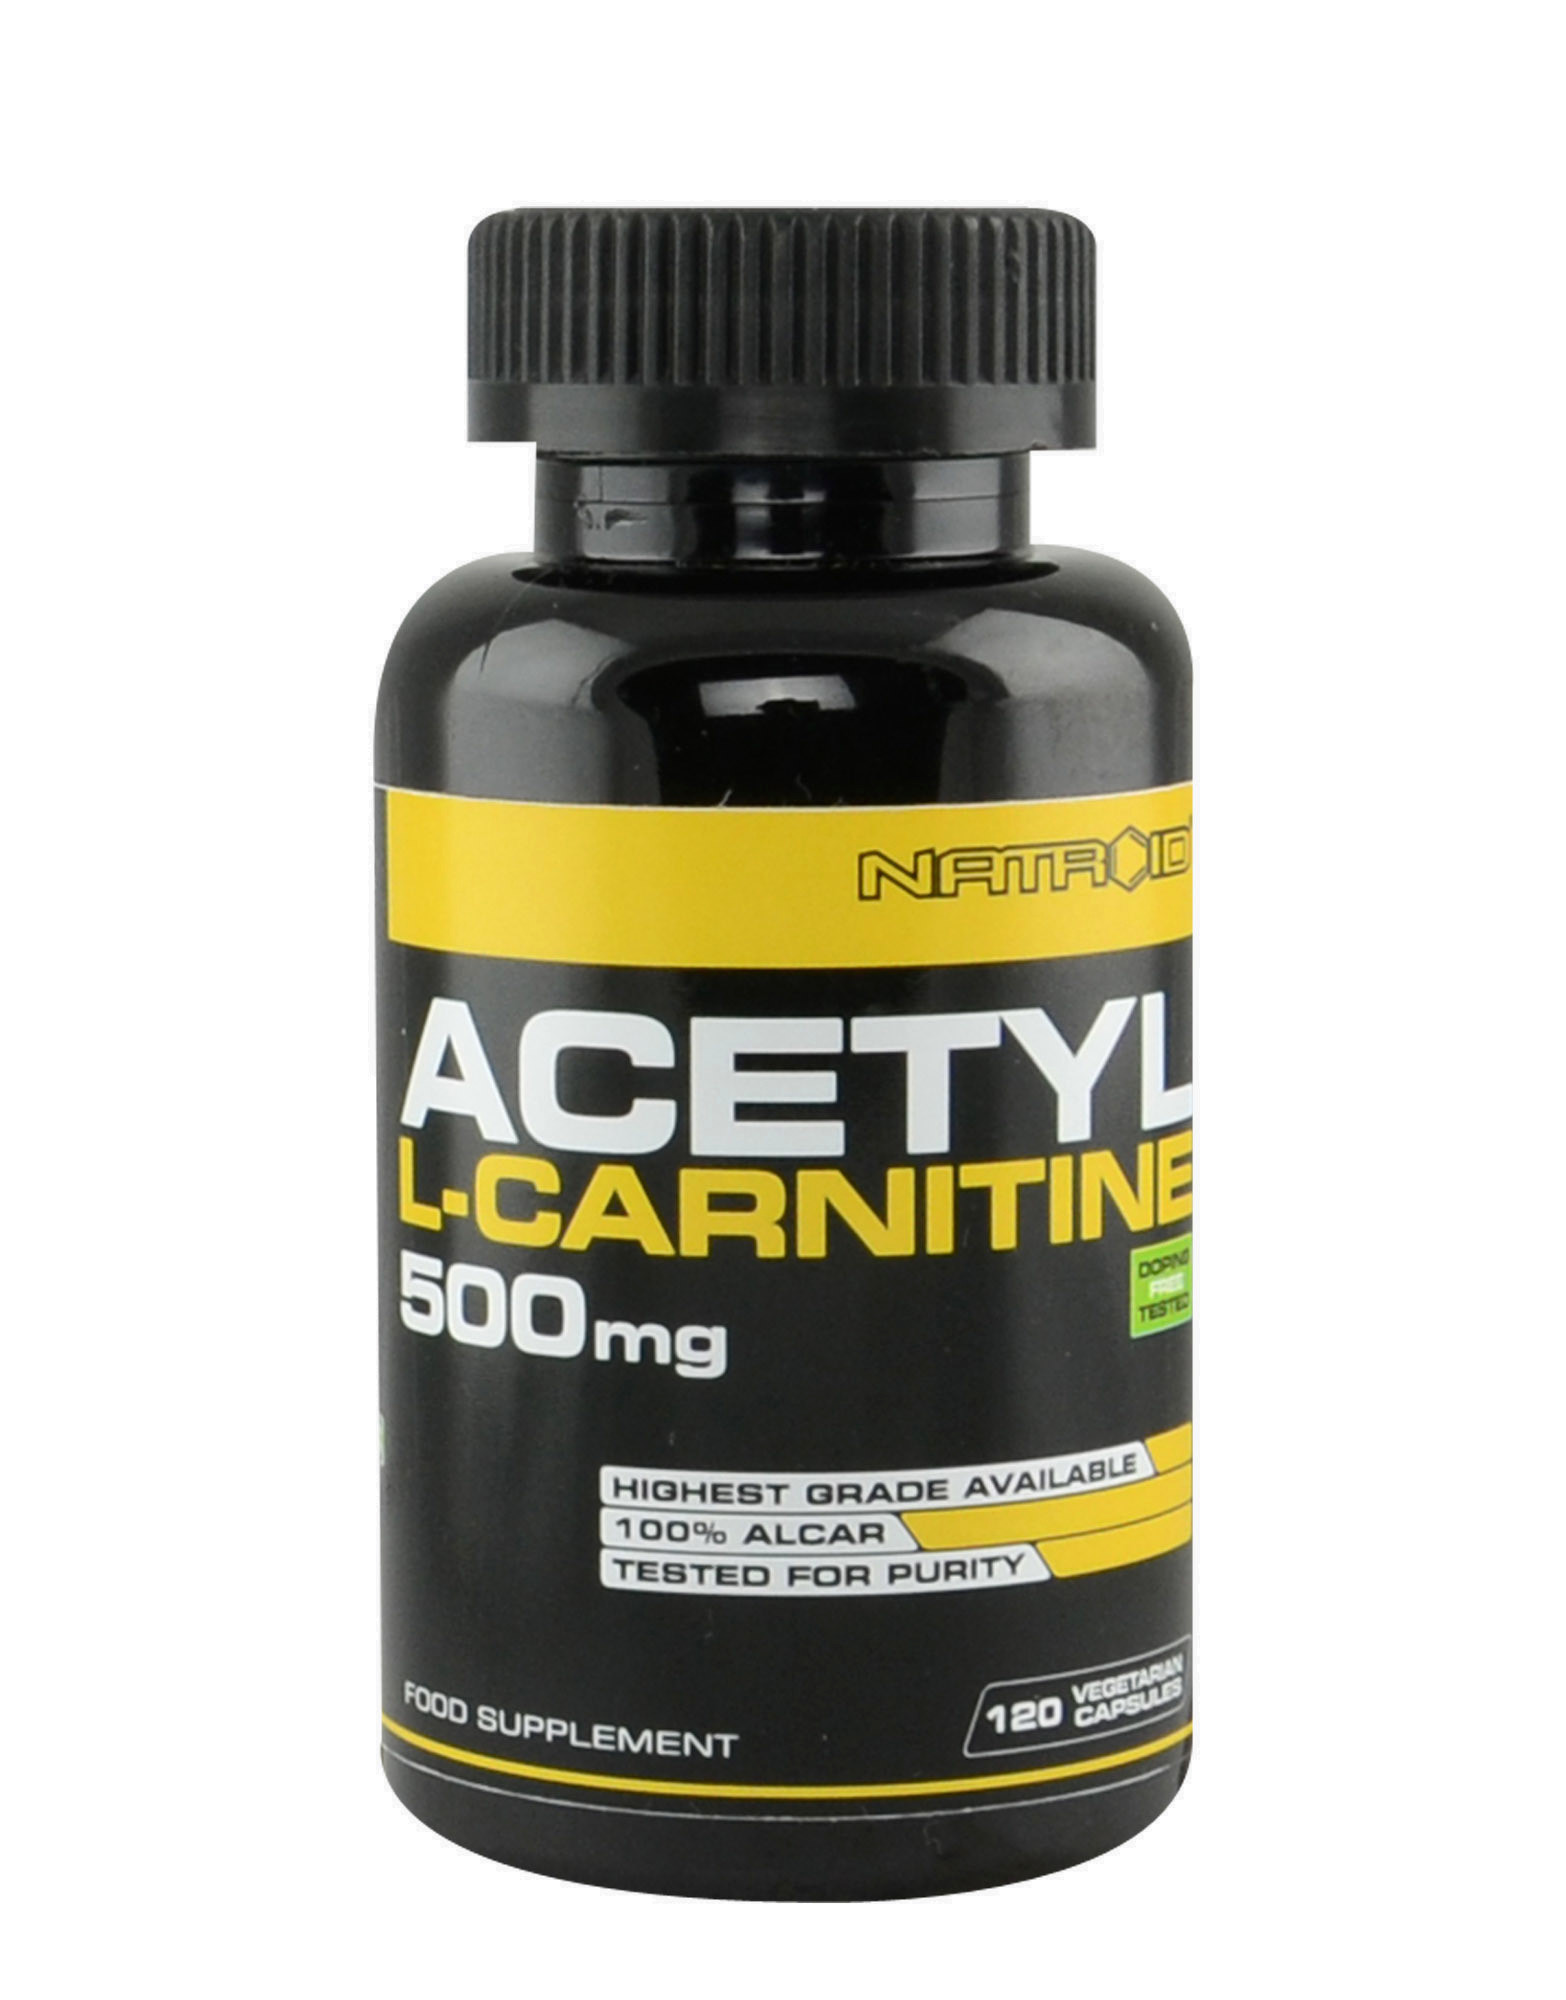 Карнитин селен. Л карнитин. Ацетил карнитин. L-Carnitine 500mg. Ацетил л карнитин.